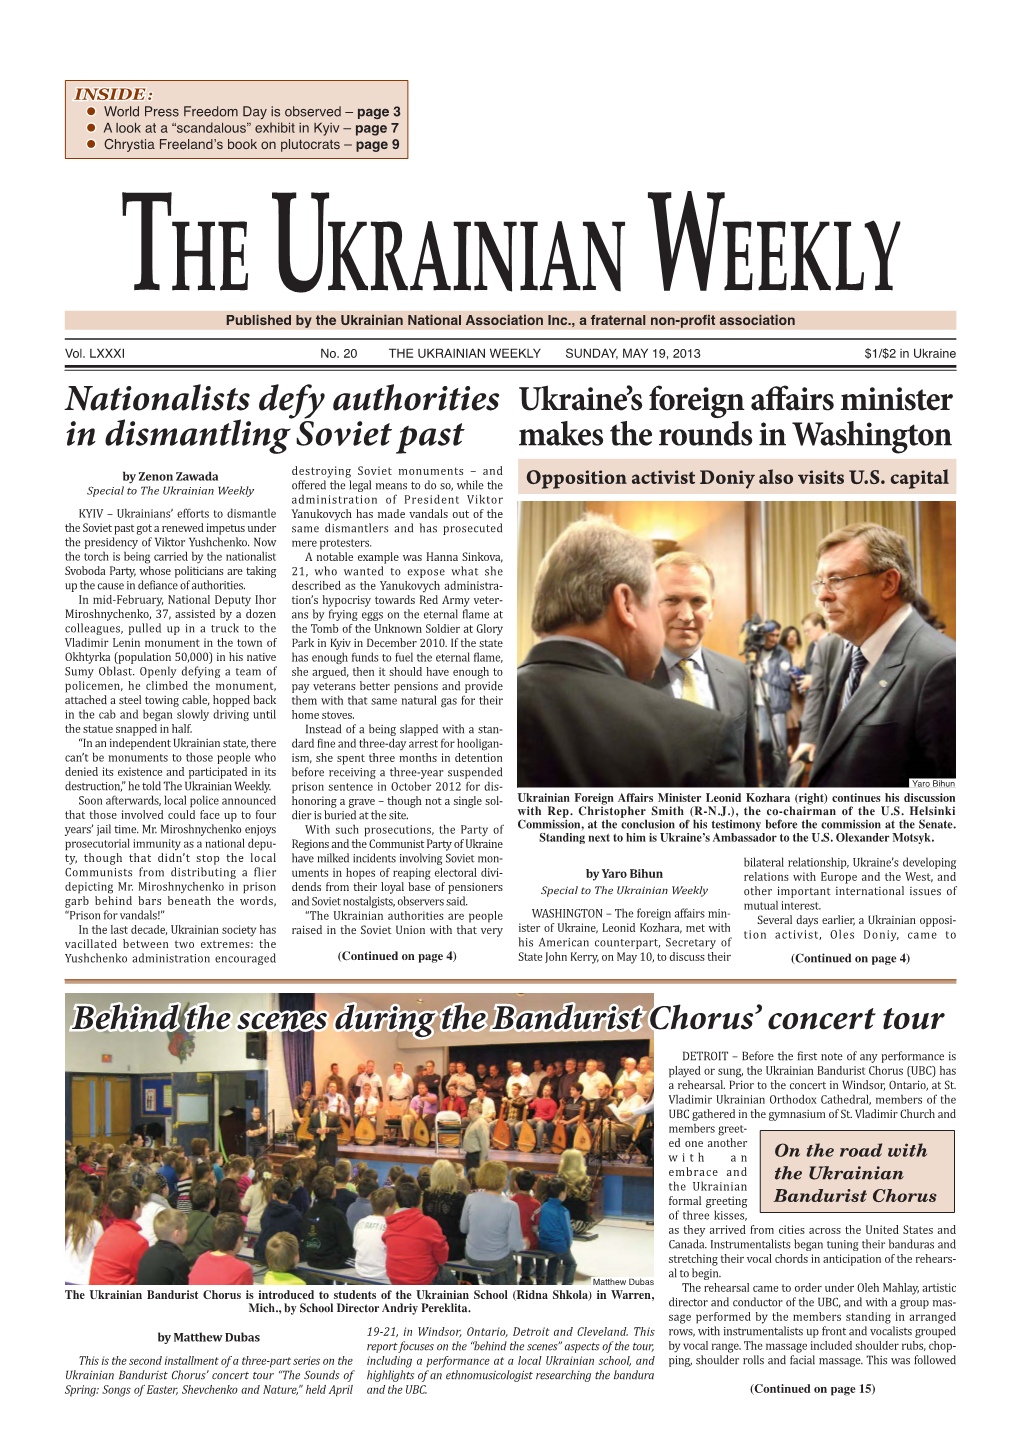 The Ukrainian Weekly 2013, No.20